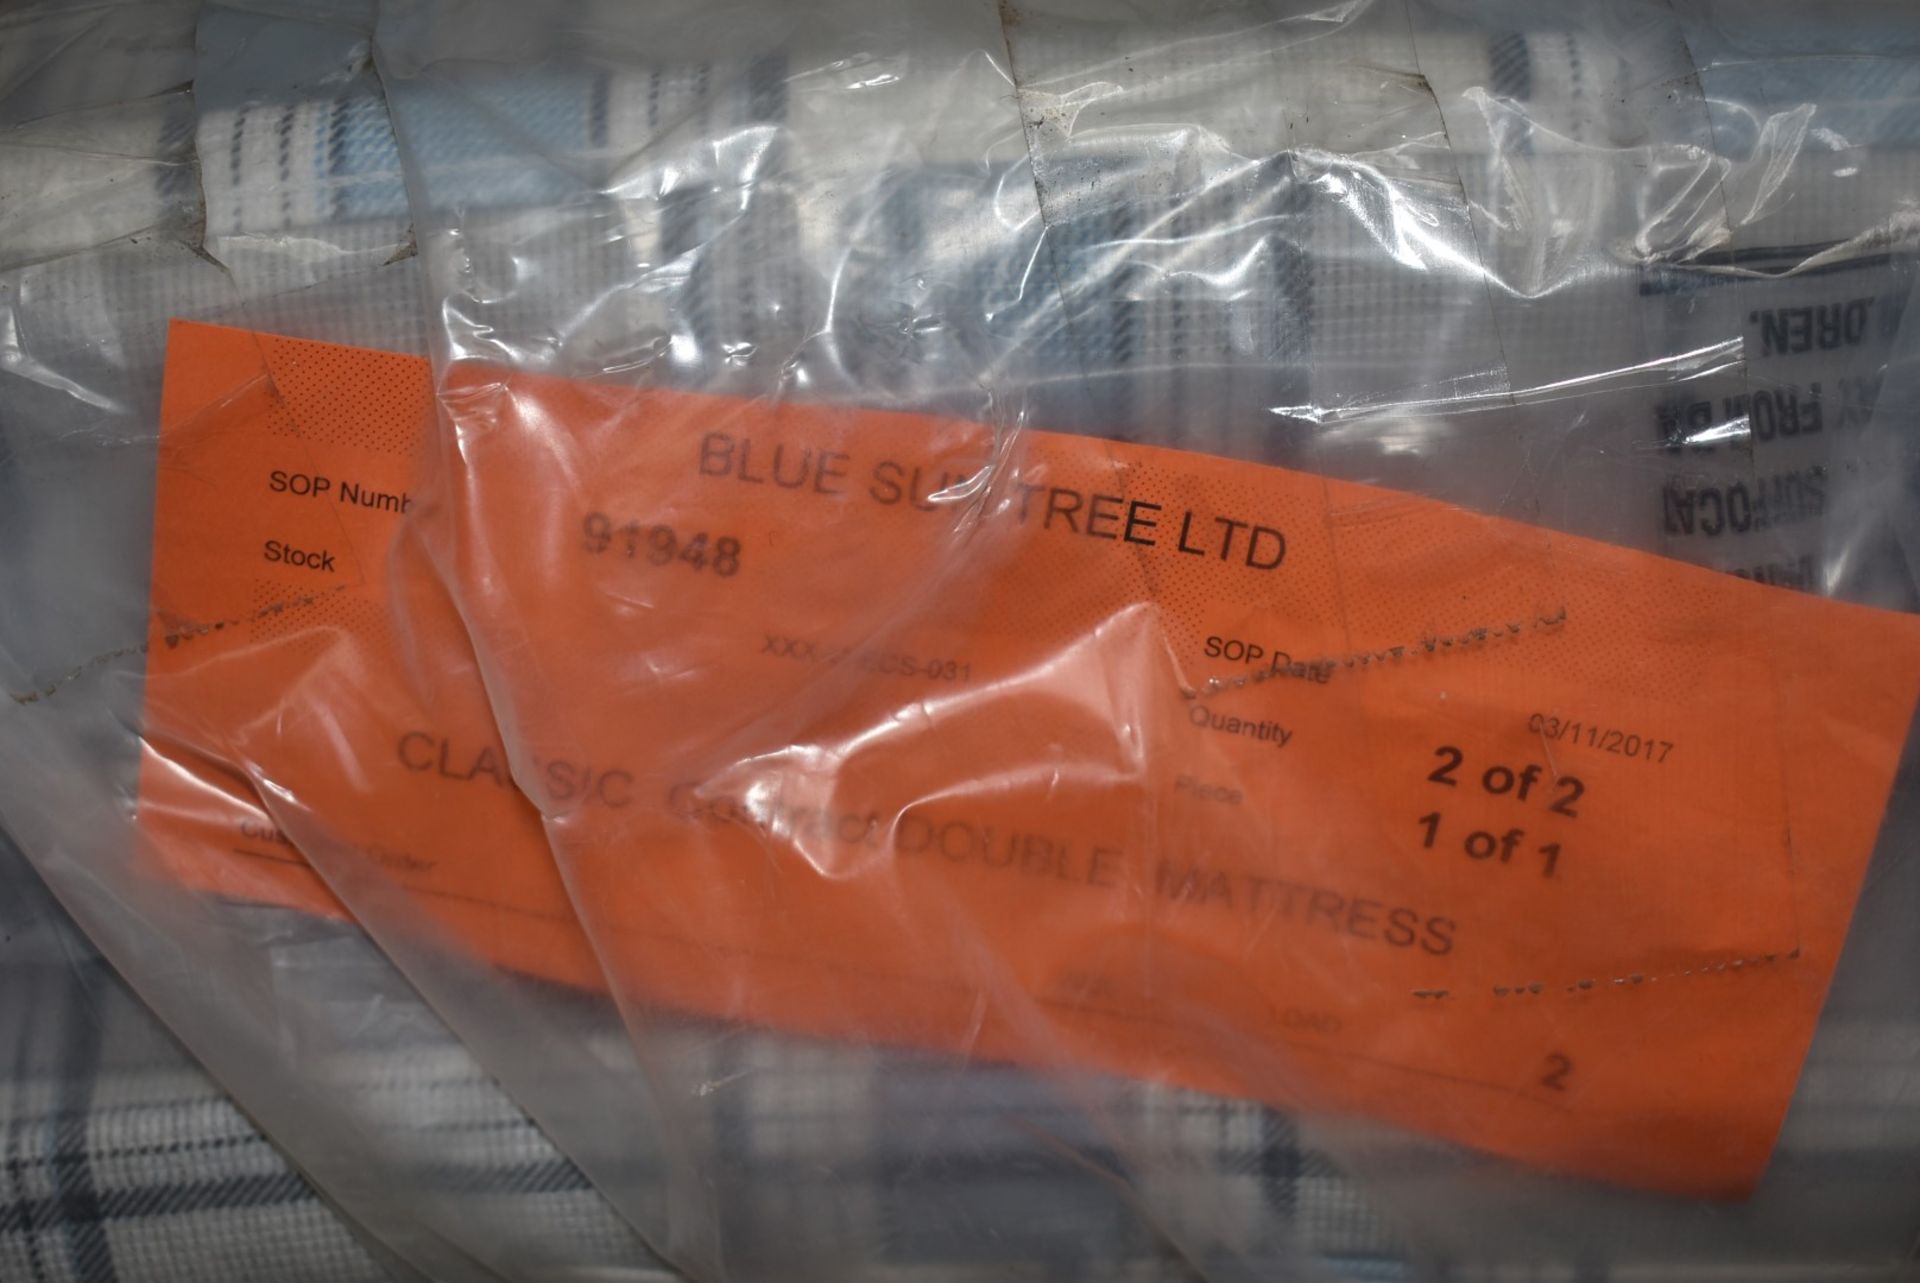 1 x Blue Suntree Double Mattress - New in Original Packaging - Ref: JP934 GITW - CL011 - Location: - Image 3 of 4